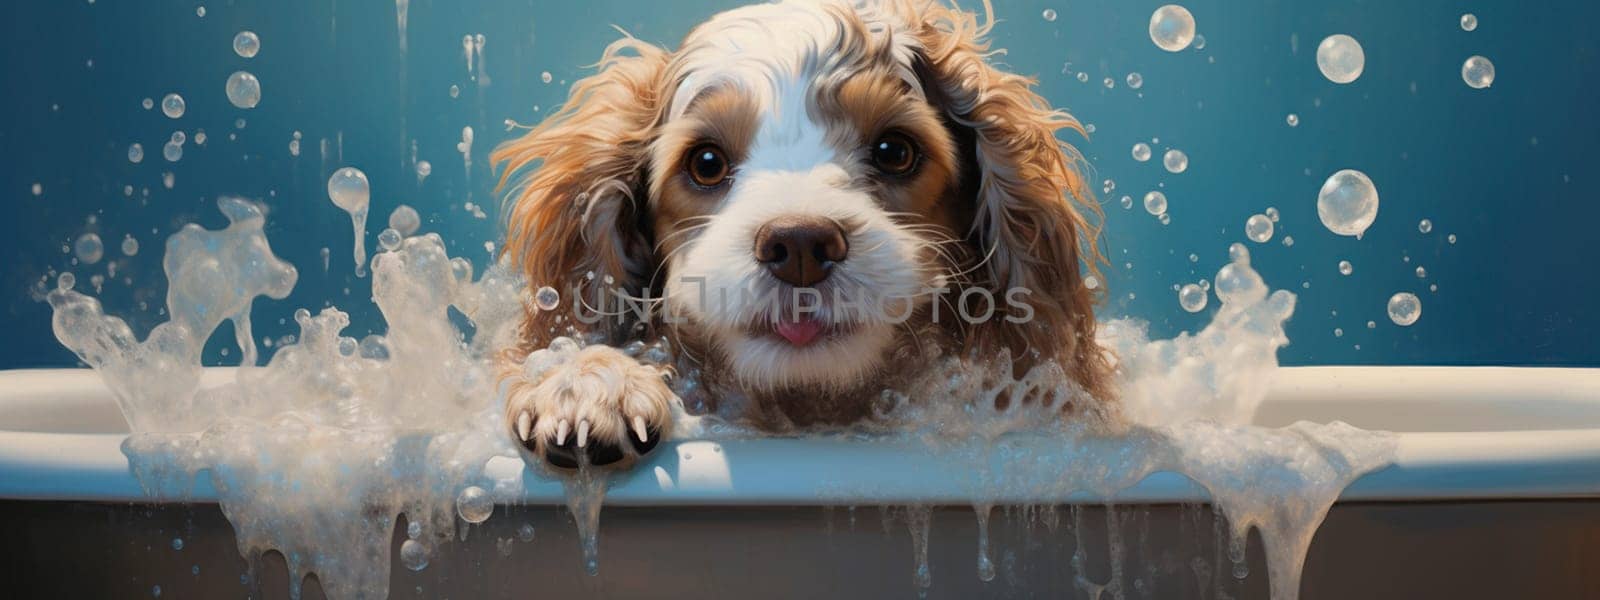 The dog bathes in a bubble bath. Generative AI, by yanadjana